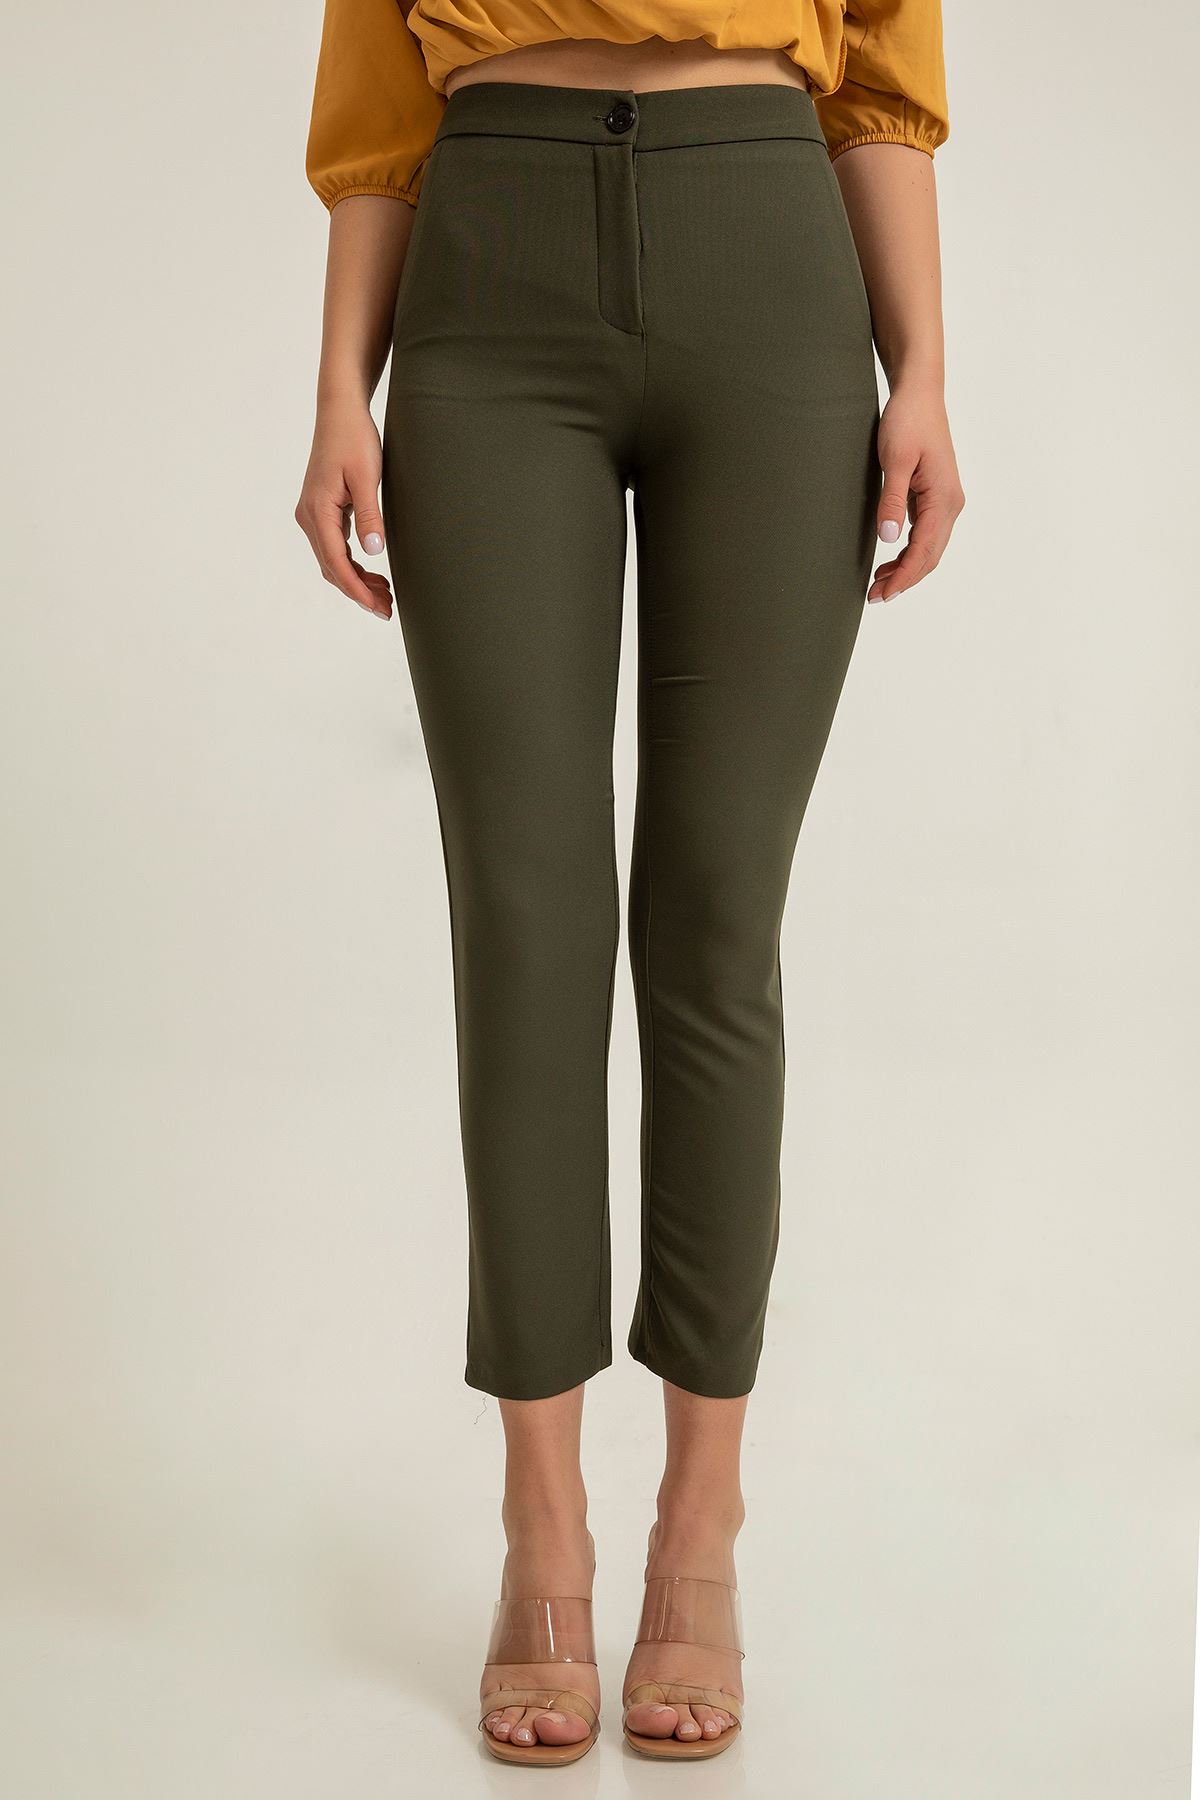 Atlas Fabric Ankle Length Tight Fit Women'S Trouser - Khaki 